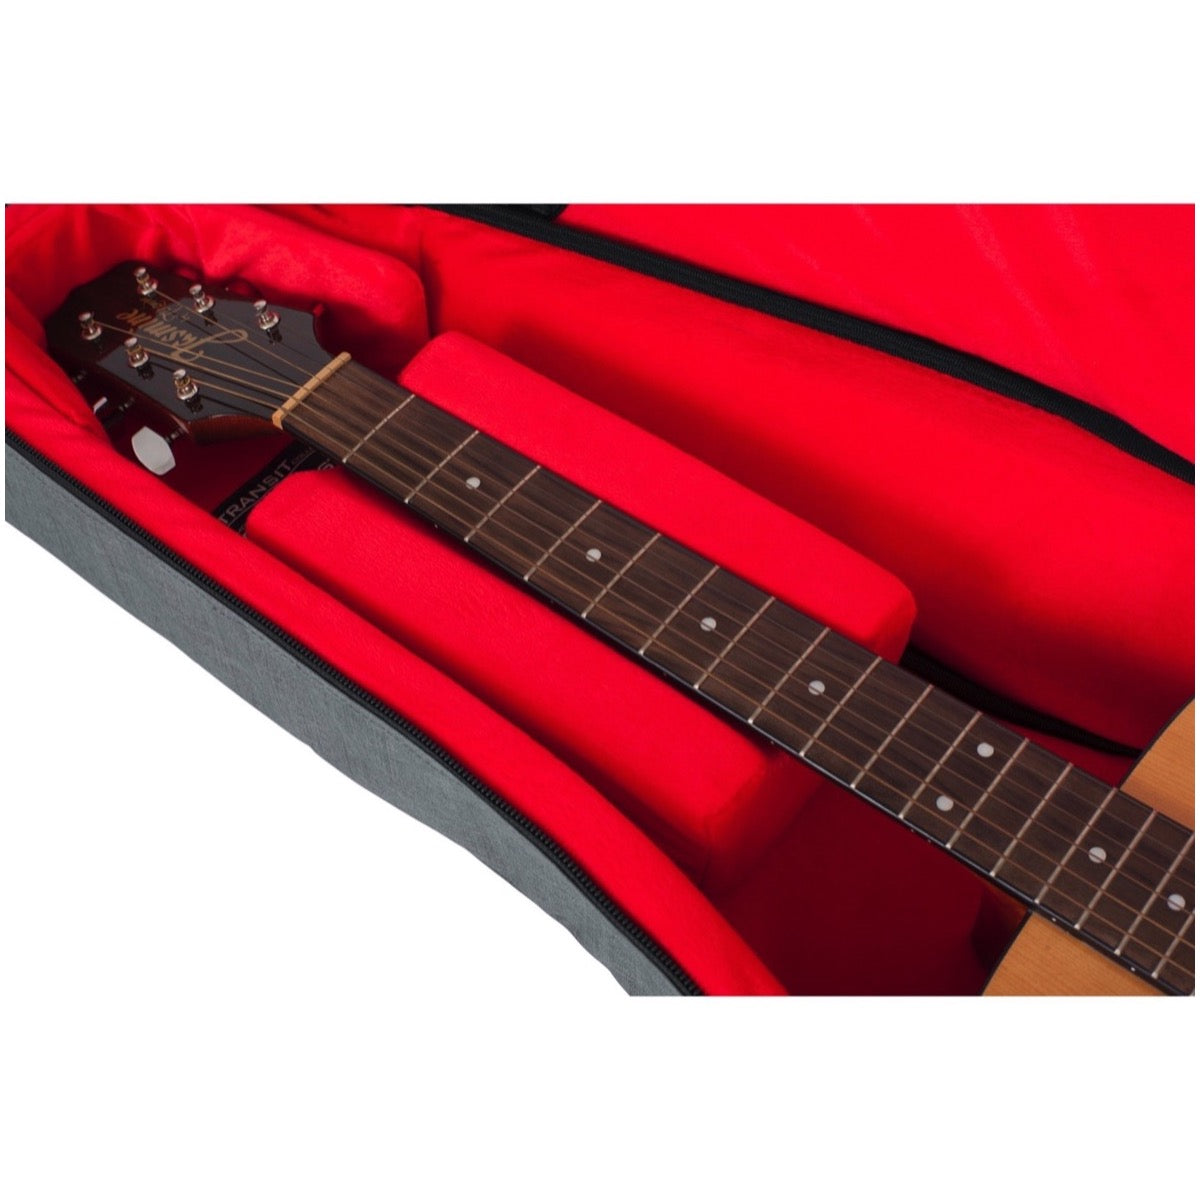 Gator Transit Series Acoustic Guitar Gig Bag, Light Grey